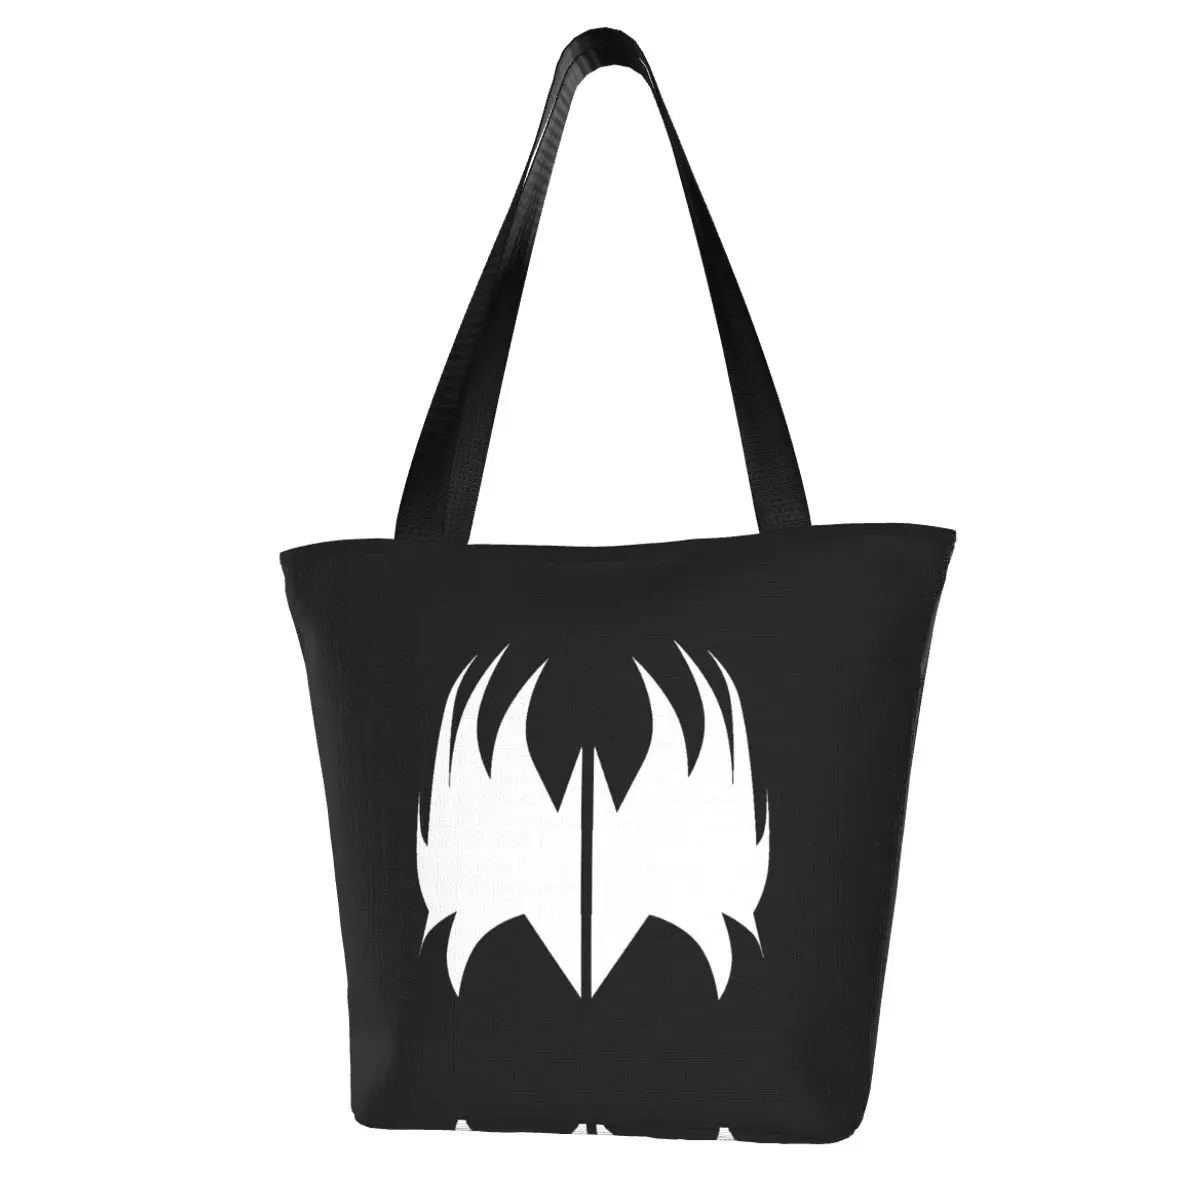 Ace Frehley Shopping Bag Aesthetic Cloth Outdoor Handbag Female Fashion Bags